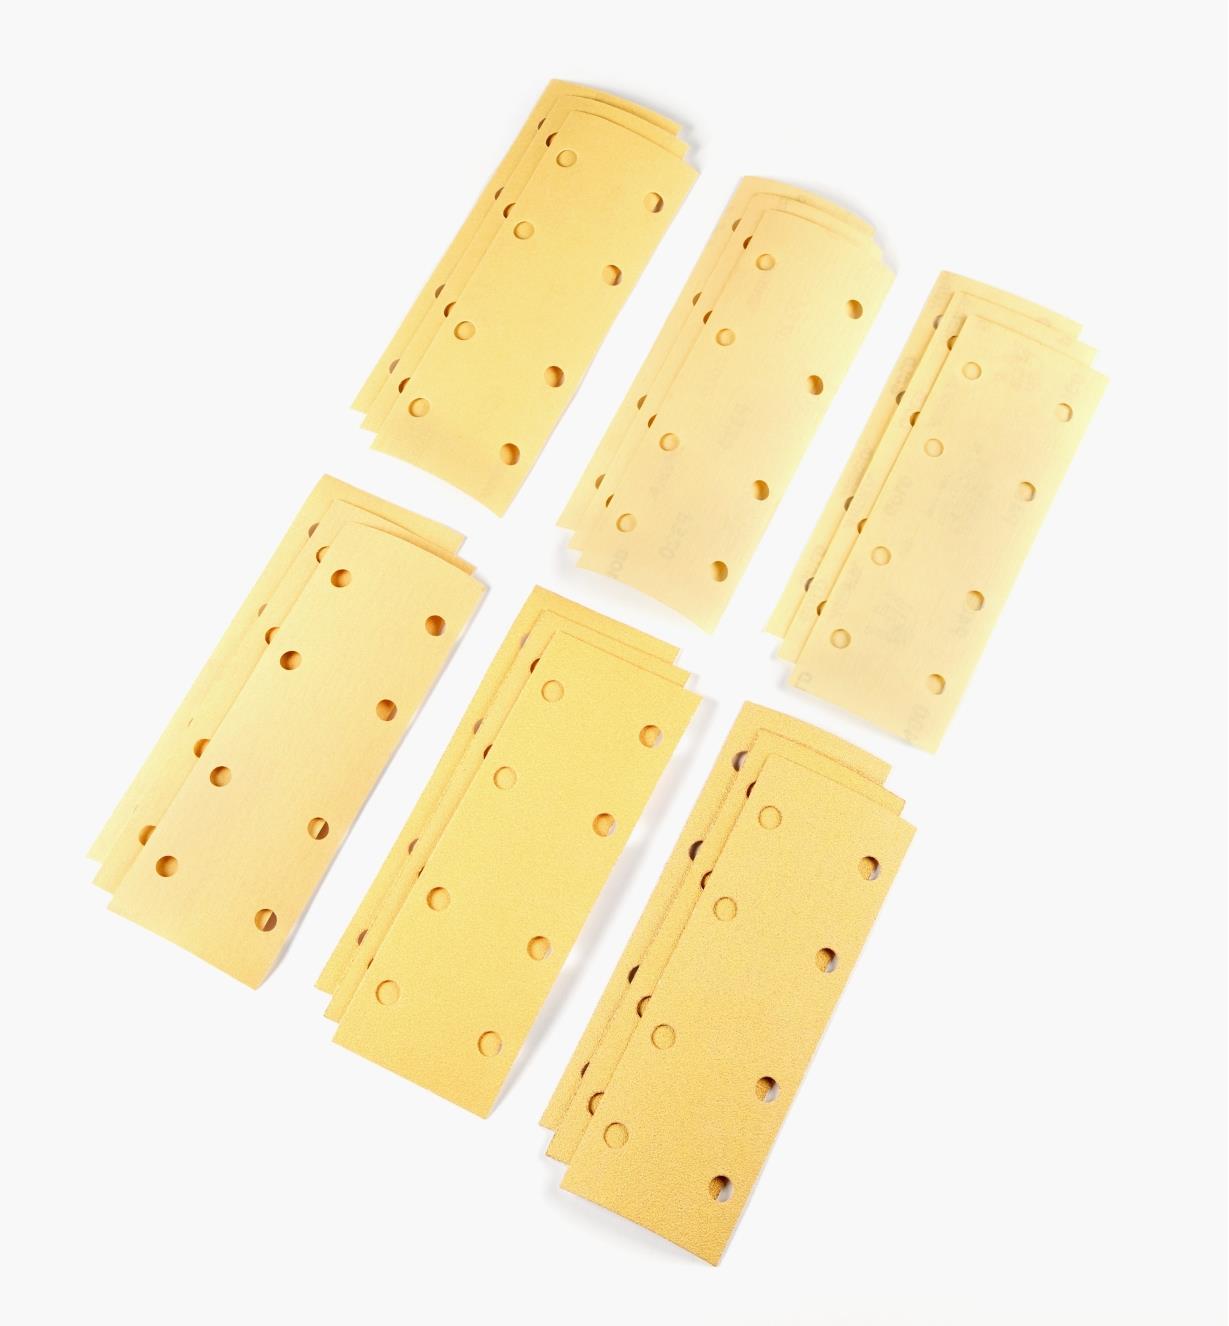 08K3150 - 18-pc. Sample Pack of Mirka Gold 2 3/4" × 7 3/4" Grip Sheets